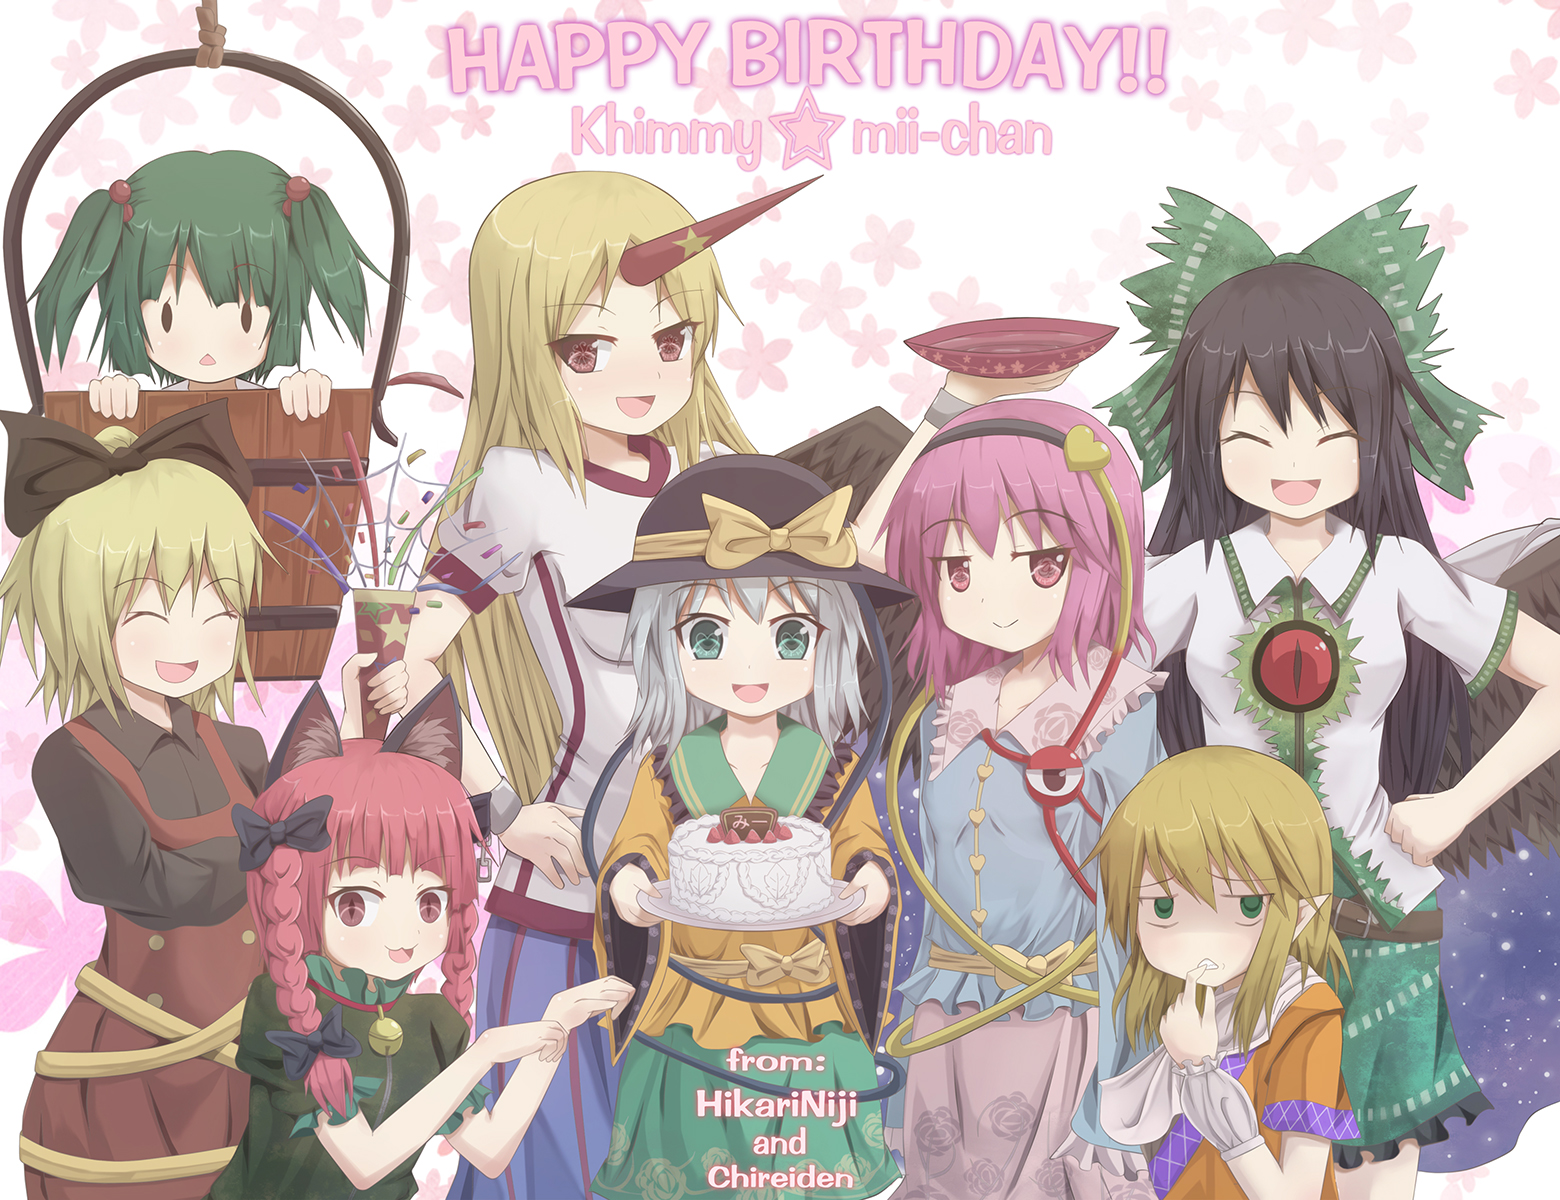 happy birthday mii-chan插画图片壁纸